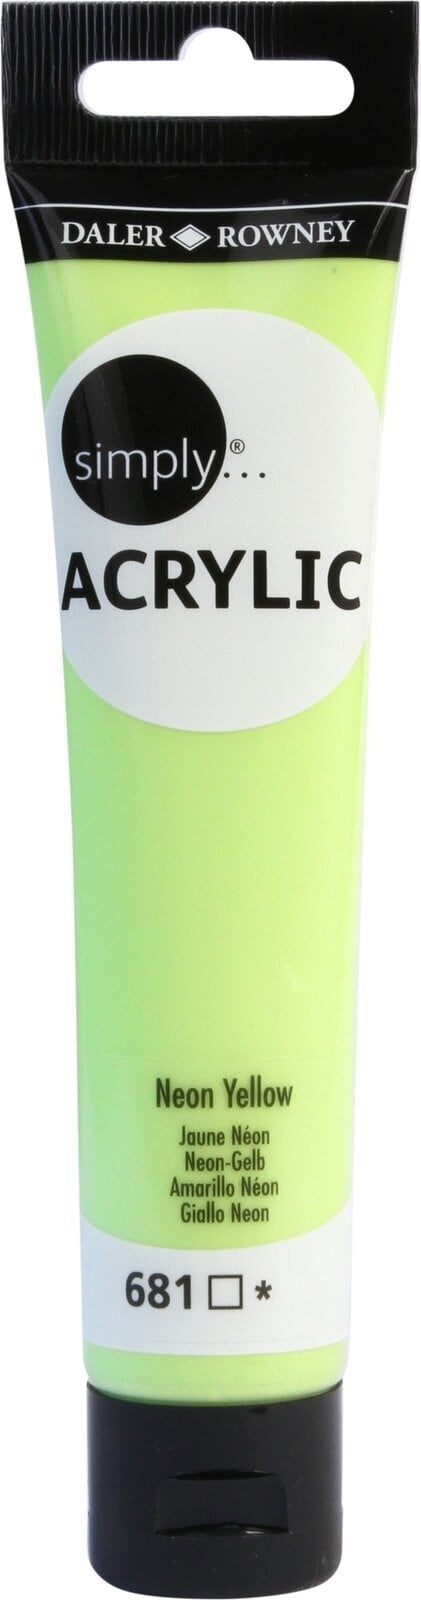 Acrylic Paint Daler Rowney Simply Acrylic Paint Neon Yellow 75 ml 1 pc